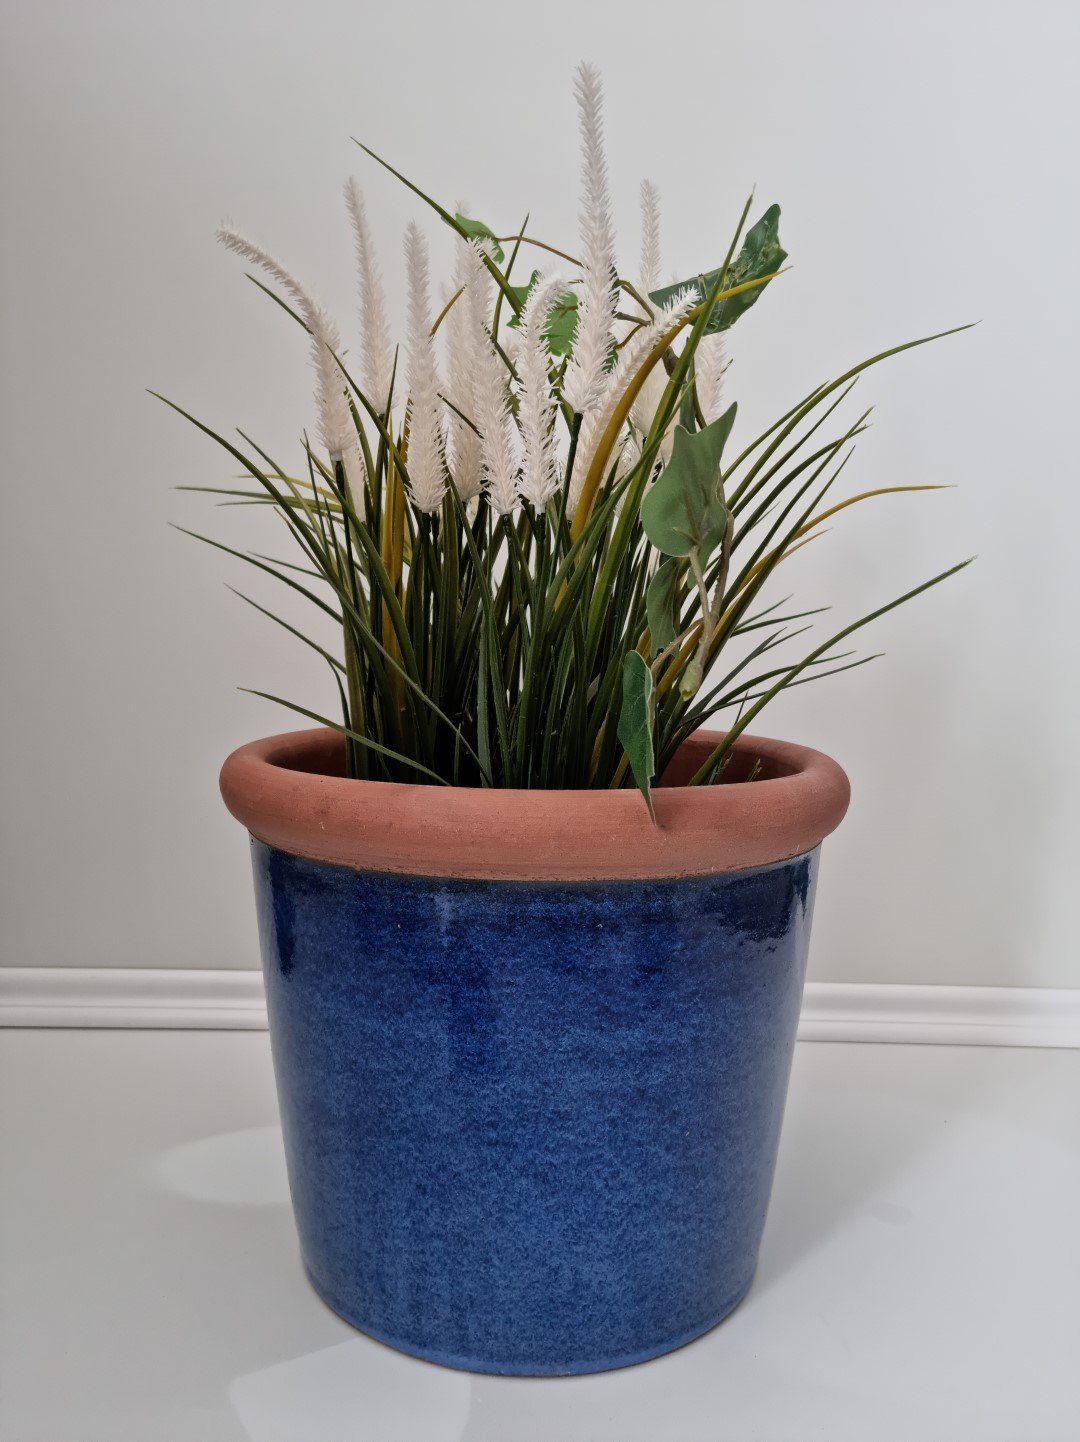 Teramico Pflanzkübel Blumentopf Keramik "Southfork" 33x26cm Blau Royal, 100% Frostfest